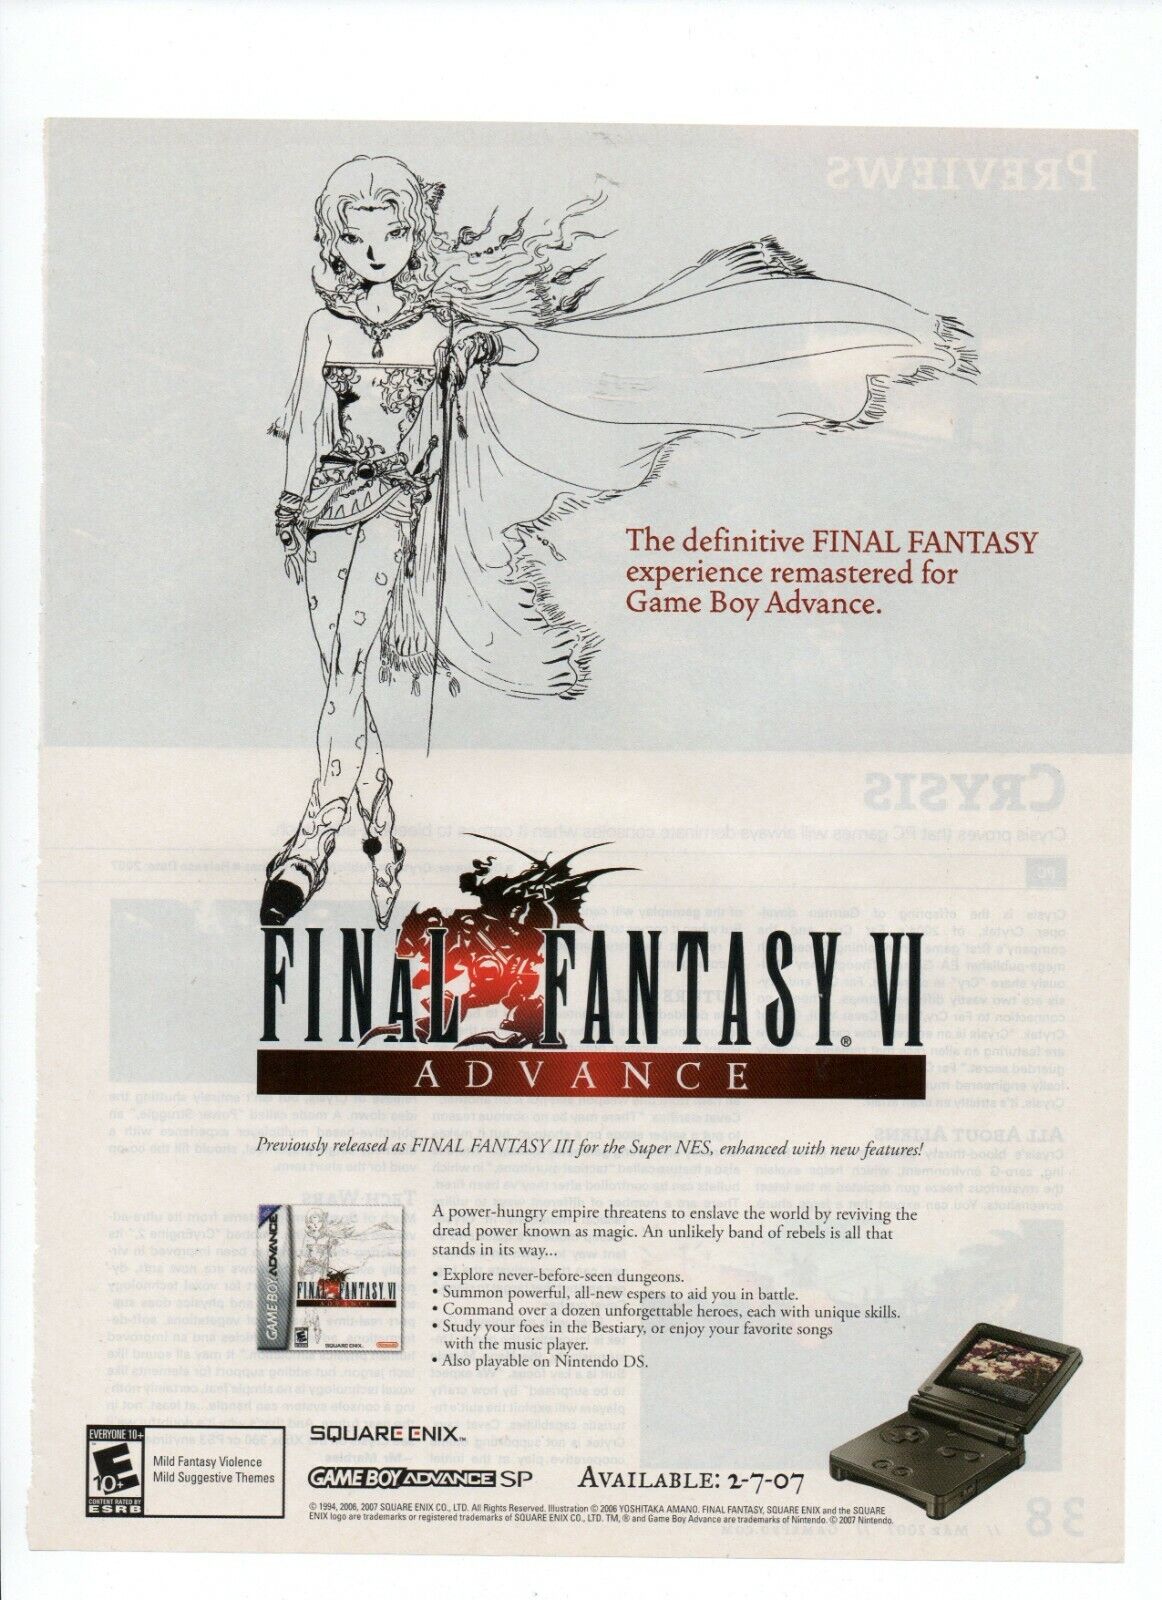 Final Fantasy VI Nintendo Game Boy Advance SP GBA RPG - 2007 Video Game Print Ad